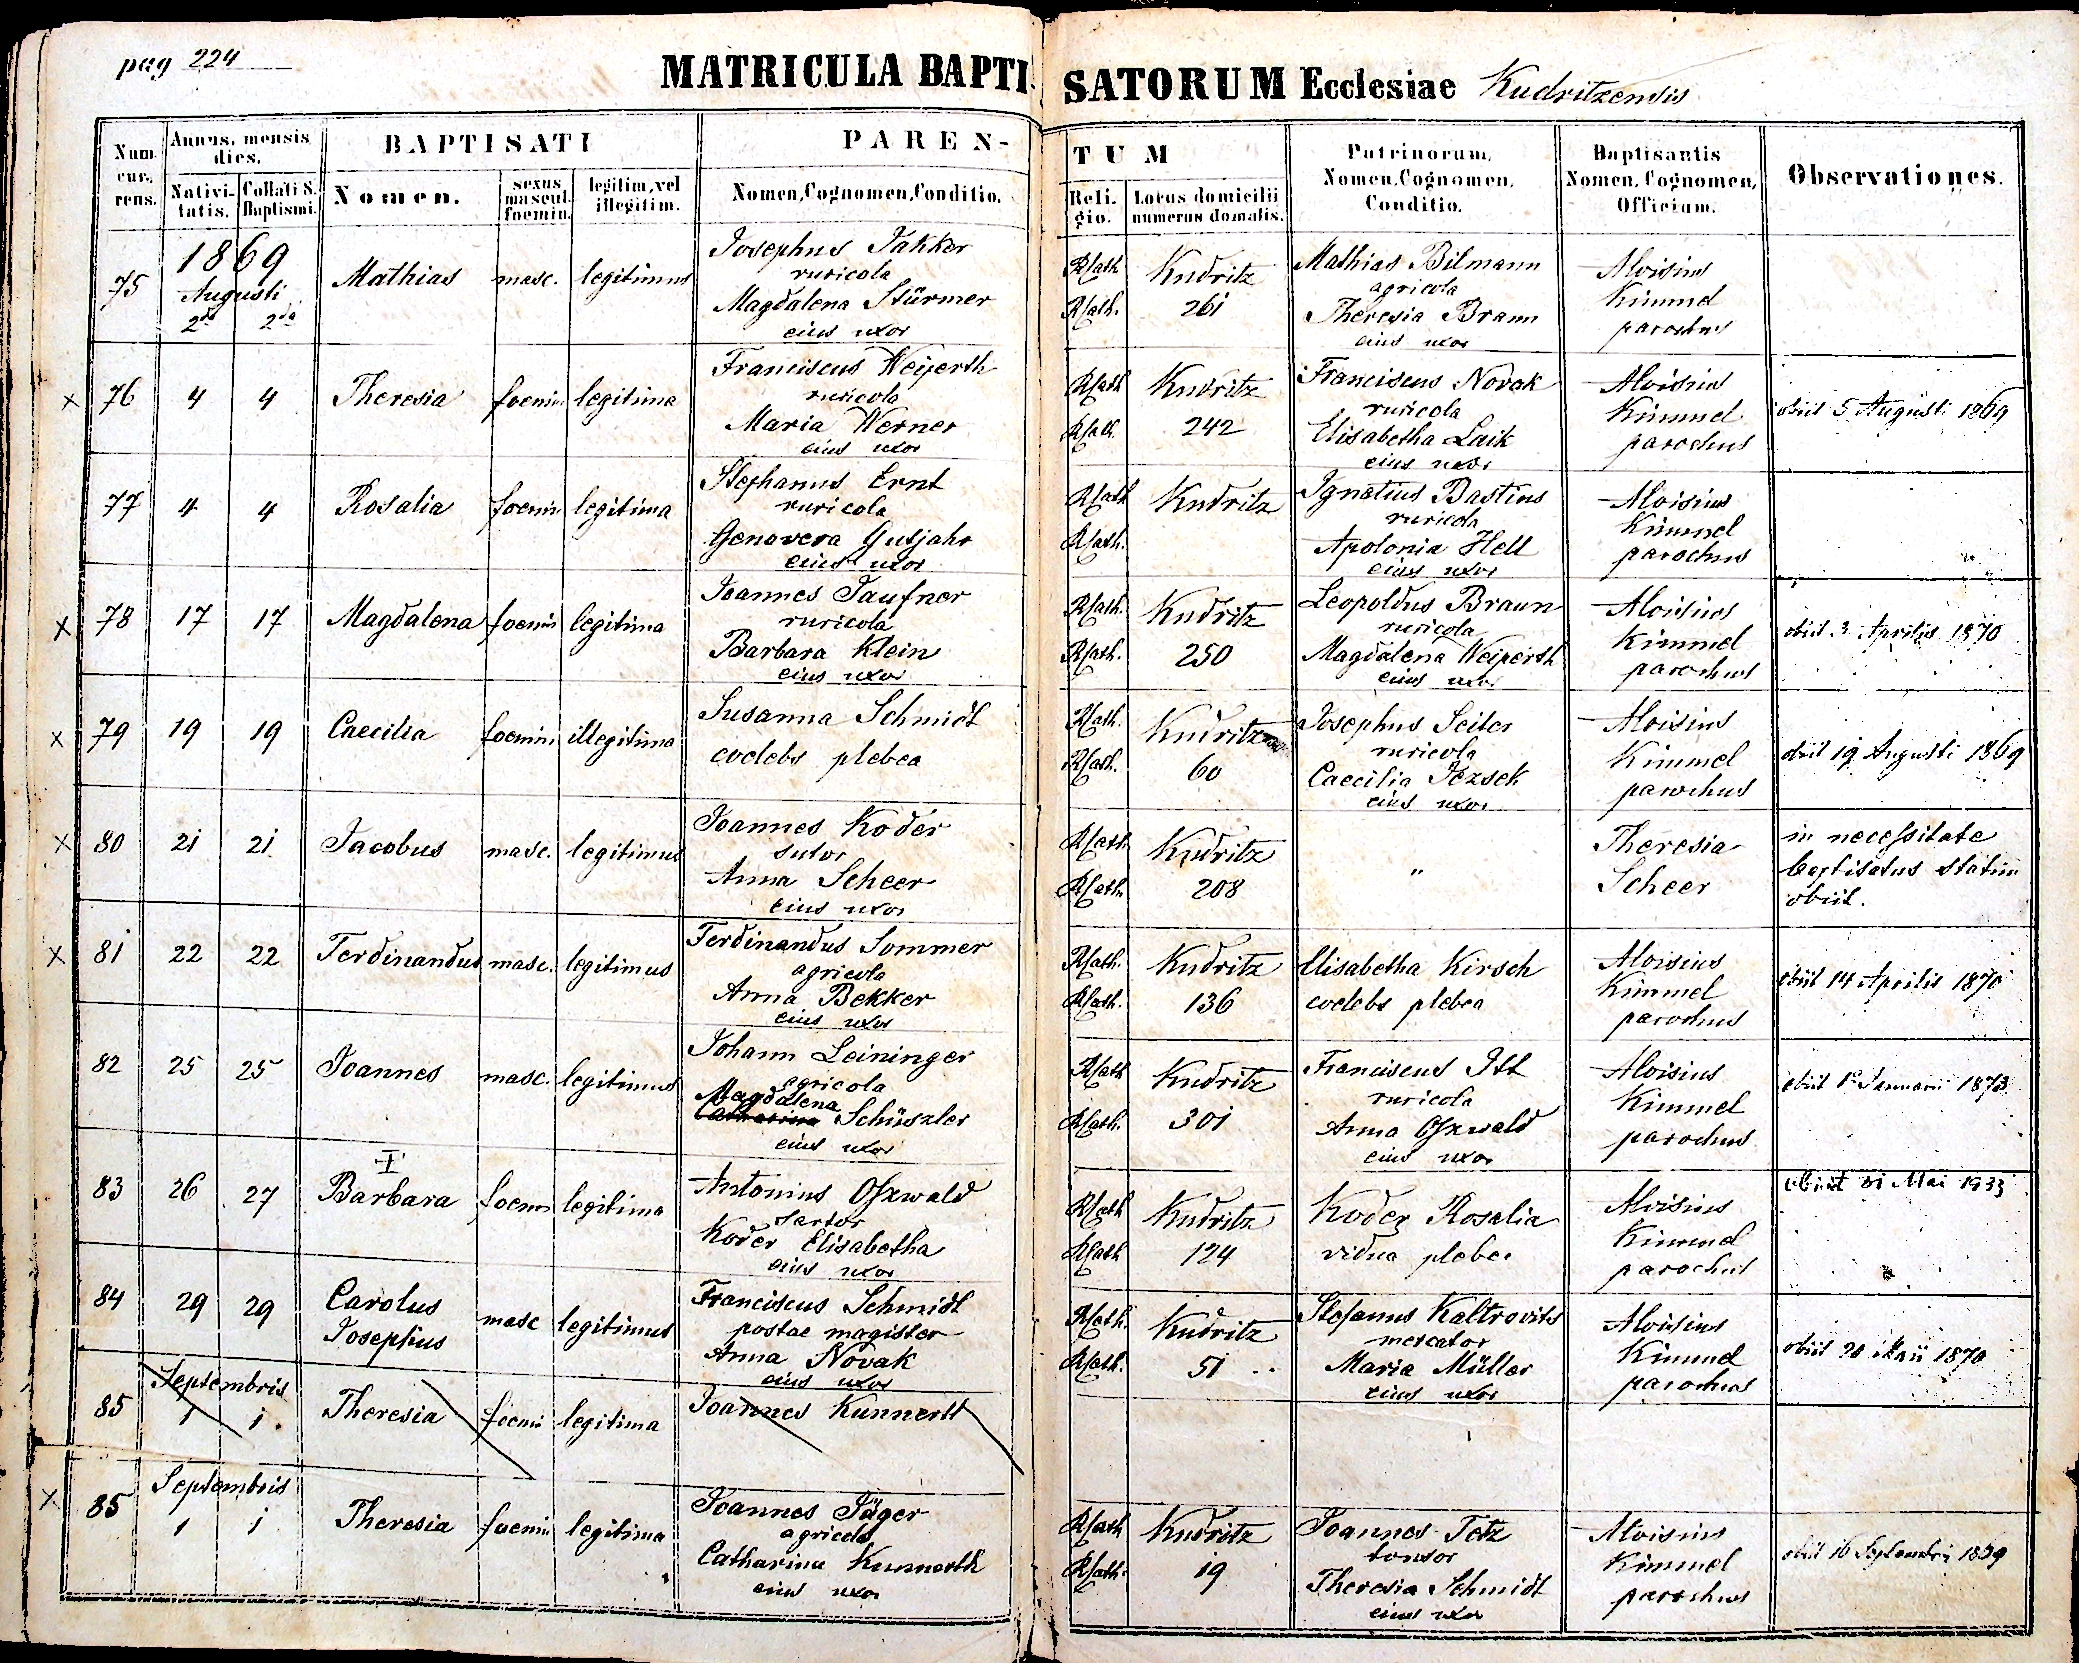 images/church_records/BIRTHS/1852-1870B/224